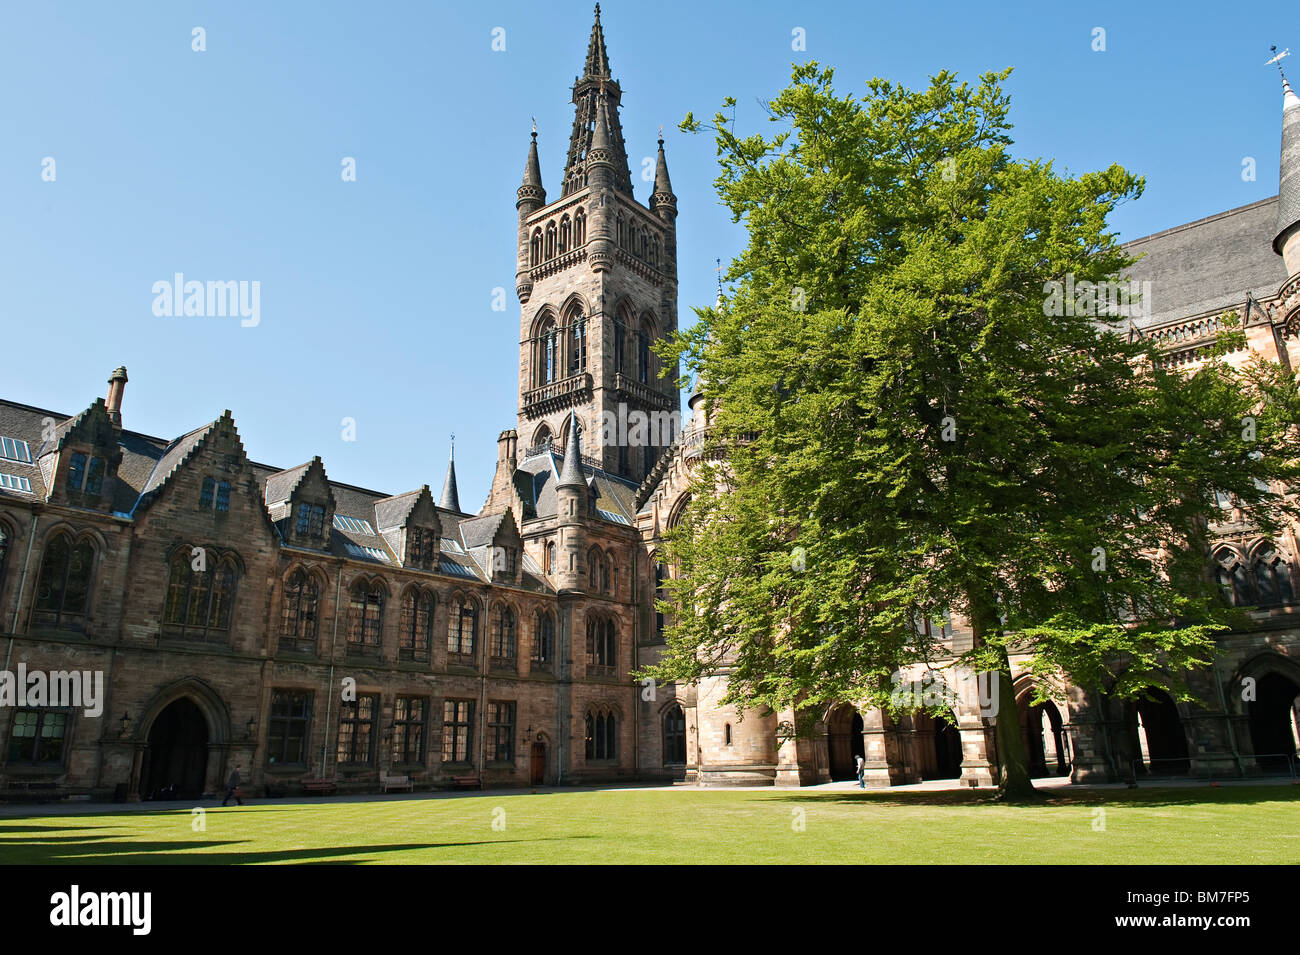 glasgow-university-scotland-uk-the-east-quadrangle-showing-the-university-BM7FP5.jpg